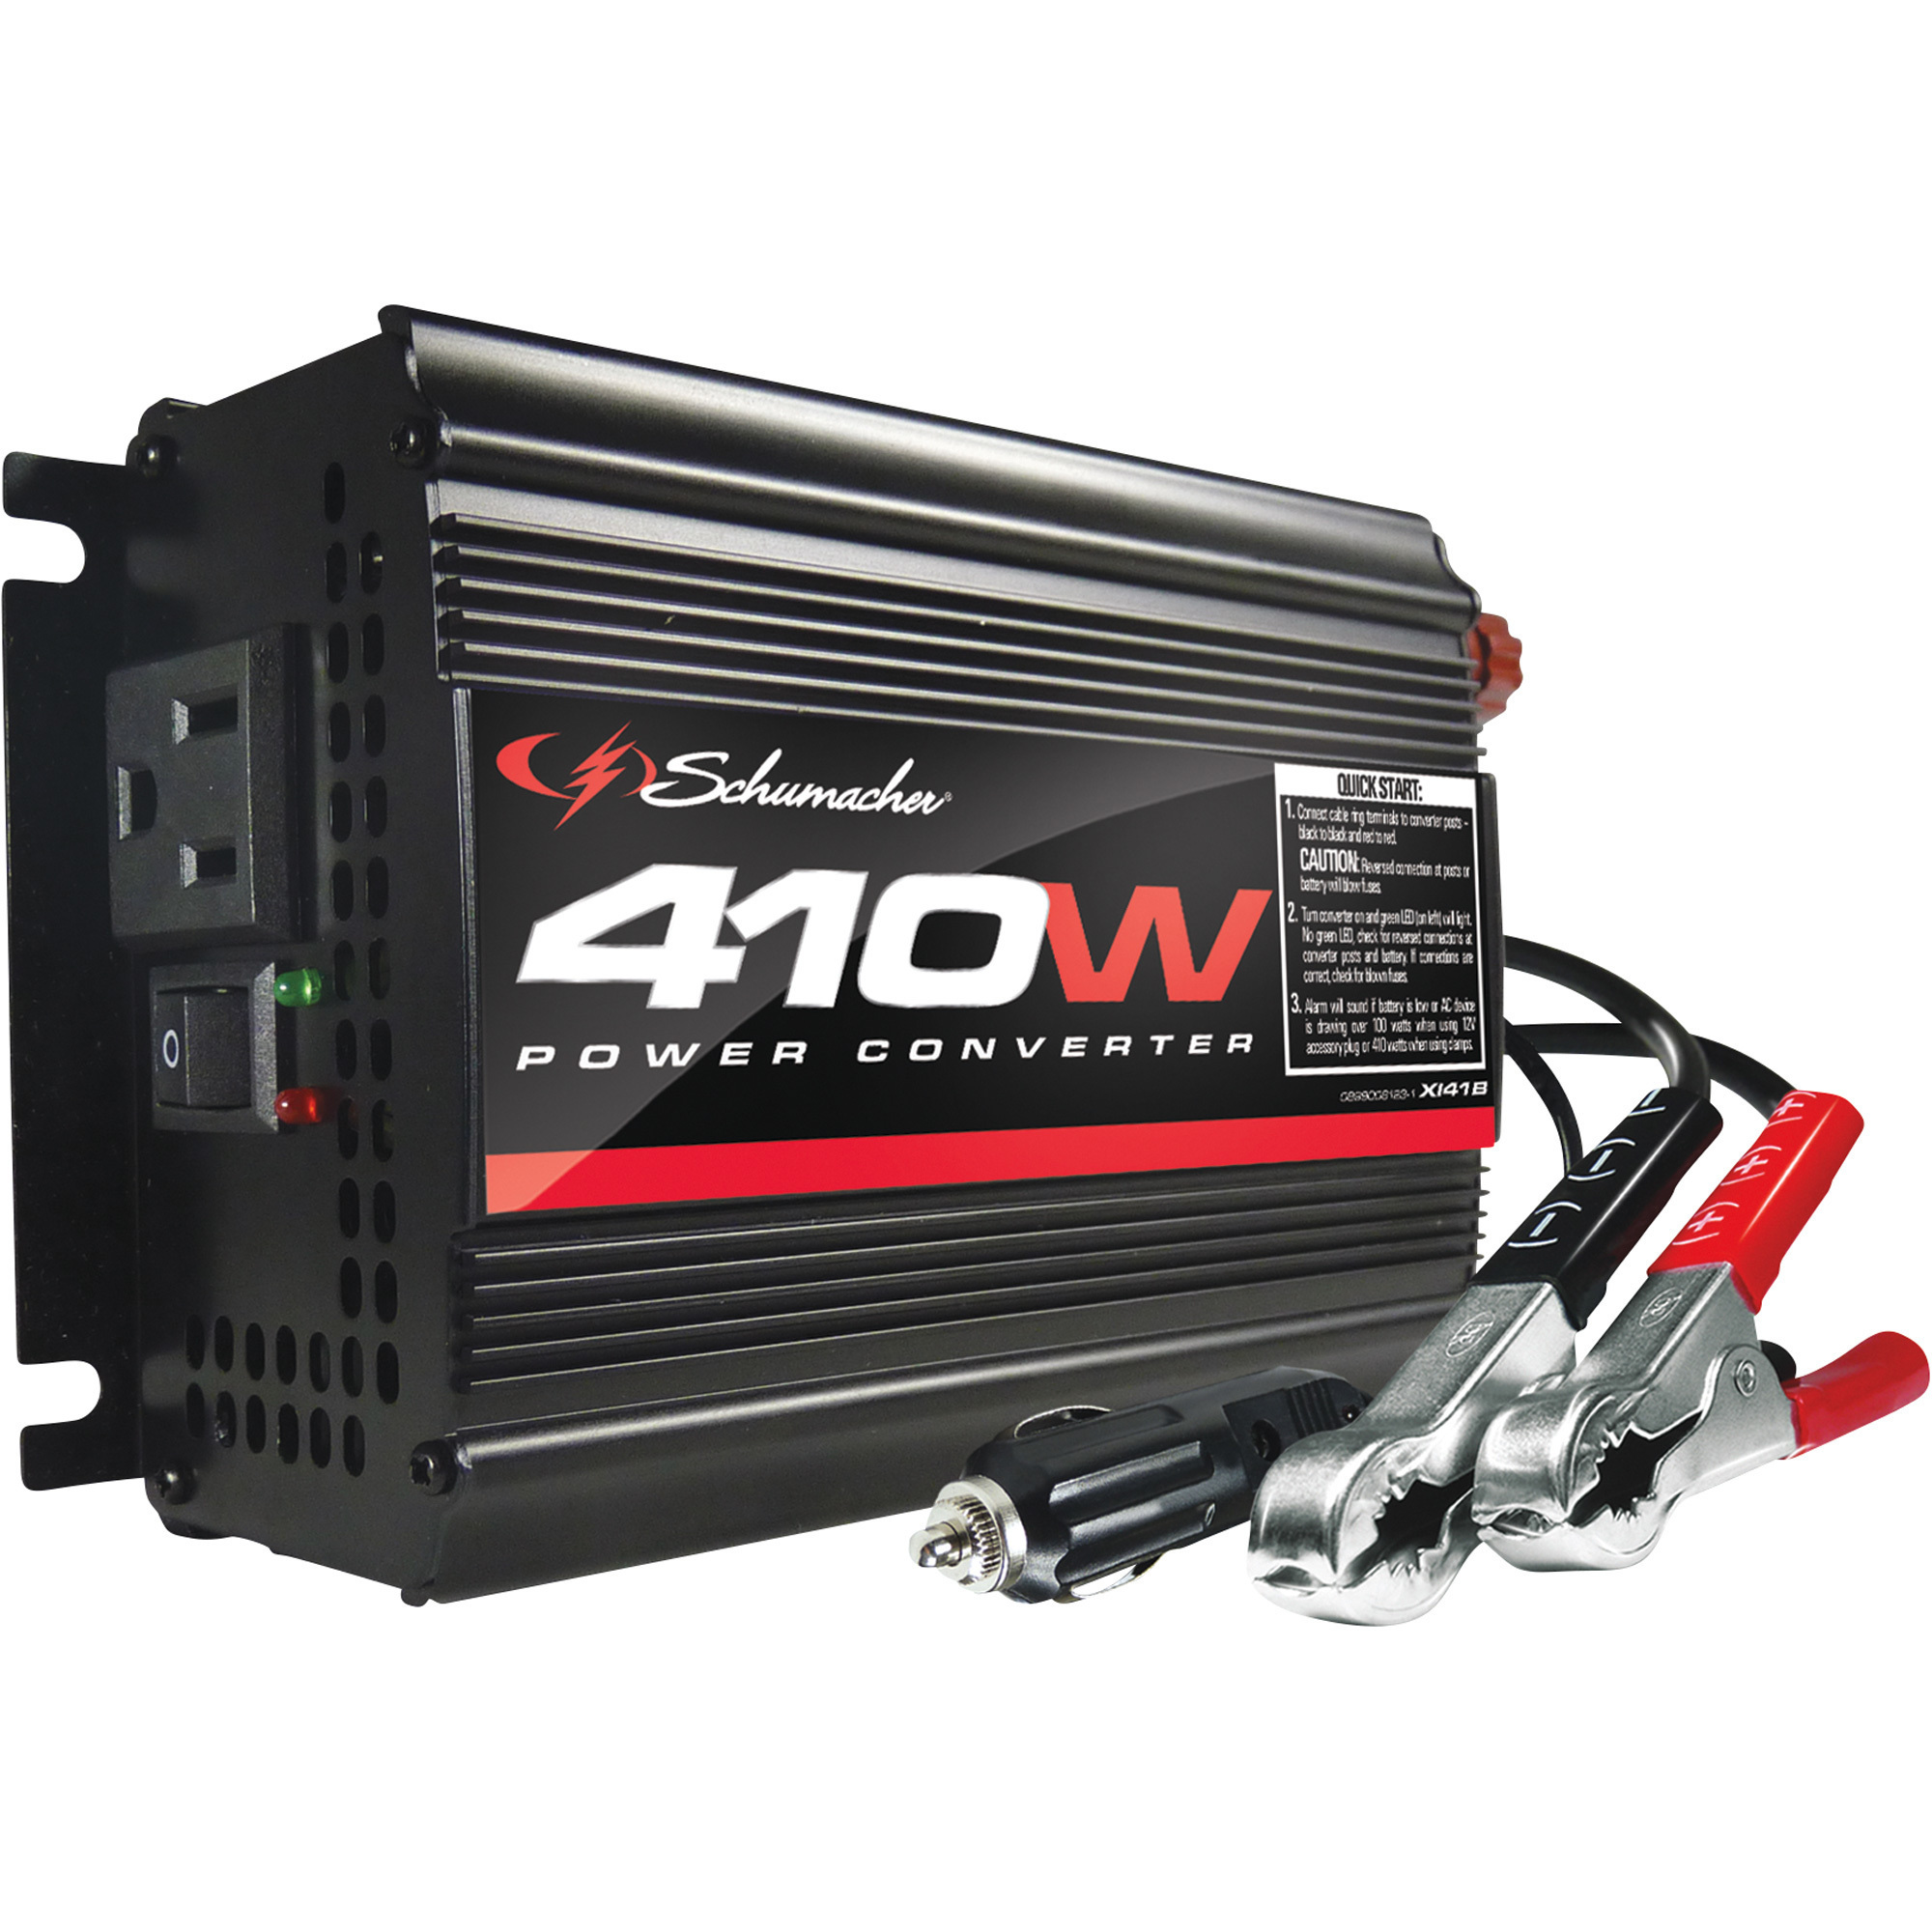 Modified Sine Wave Power Converter — 410 Watts, 1 AC Outlet/1 USB Port, Model - Schumacher XI41B